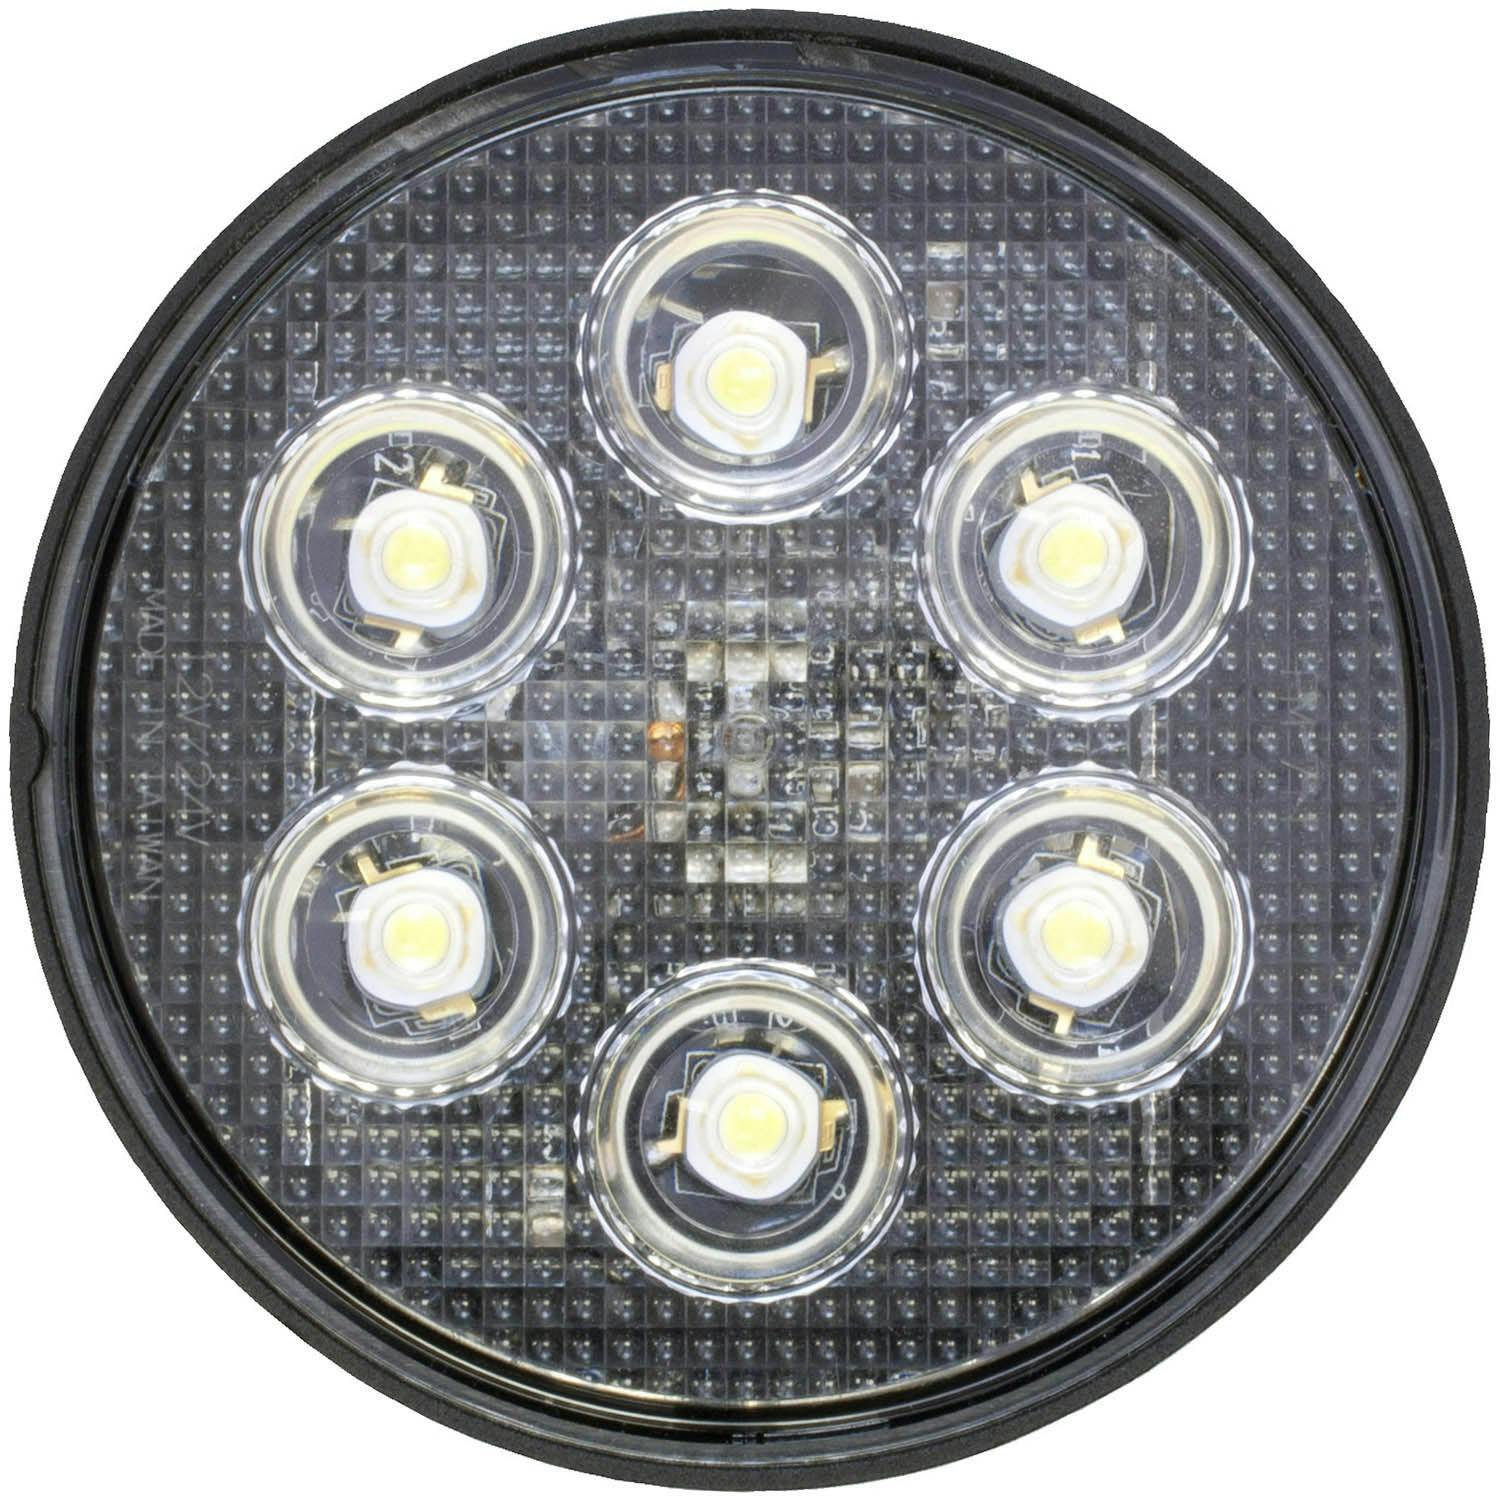 LED Replacement Beam Round, Work Light Par 36, 900 Lumen, 4.41", box (Pack of 20) - 711-MV